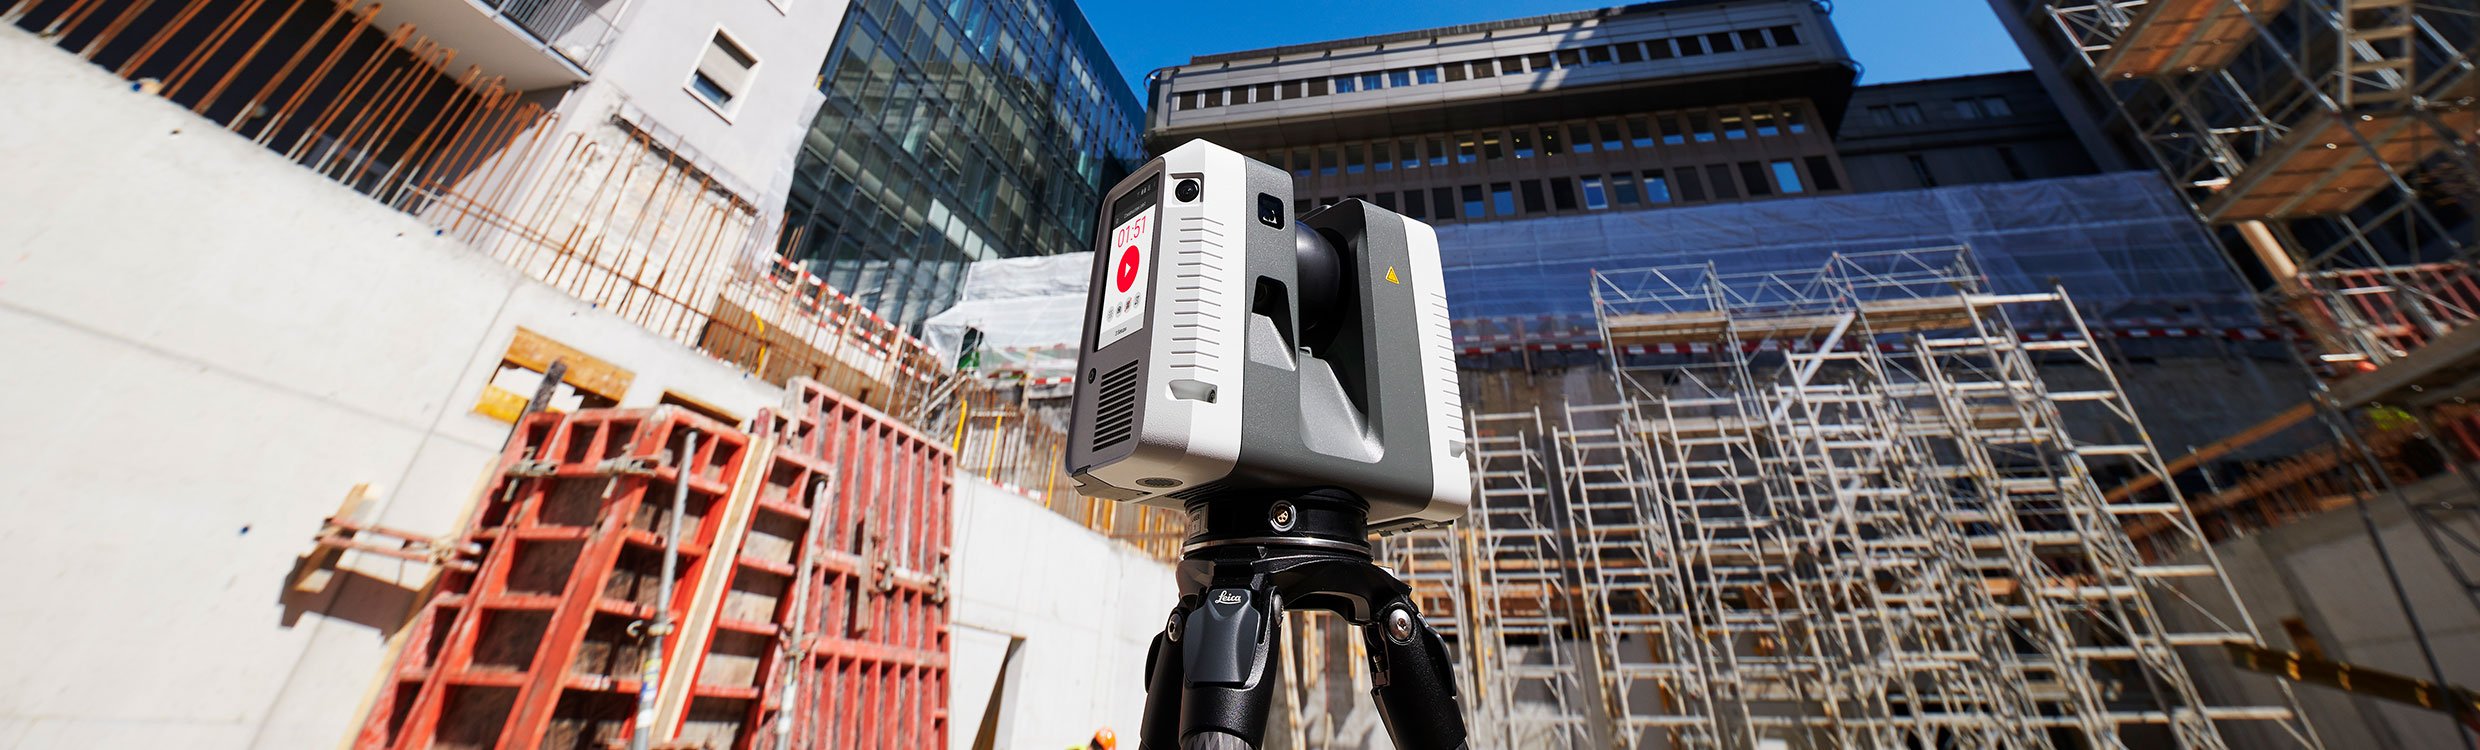 Leica Laser Scanner on construction site - Scan to BIM